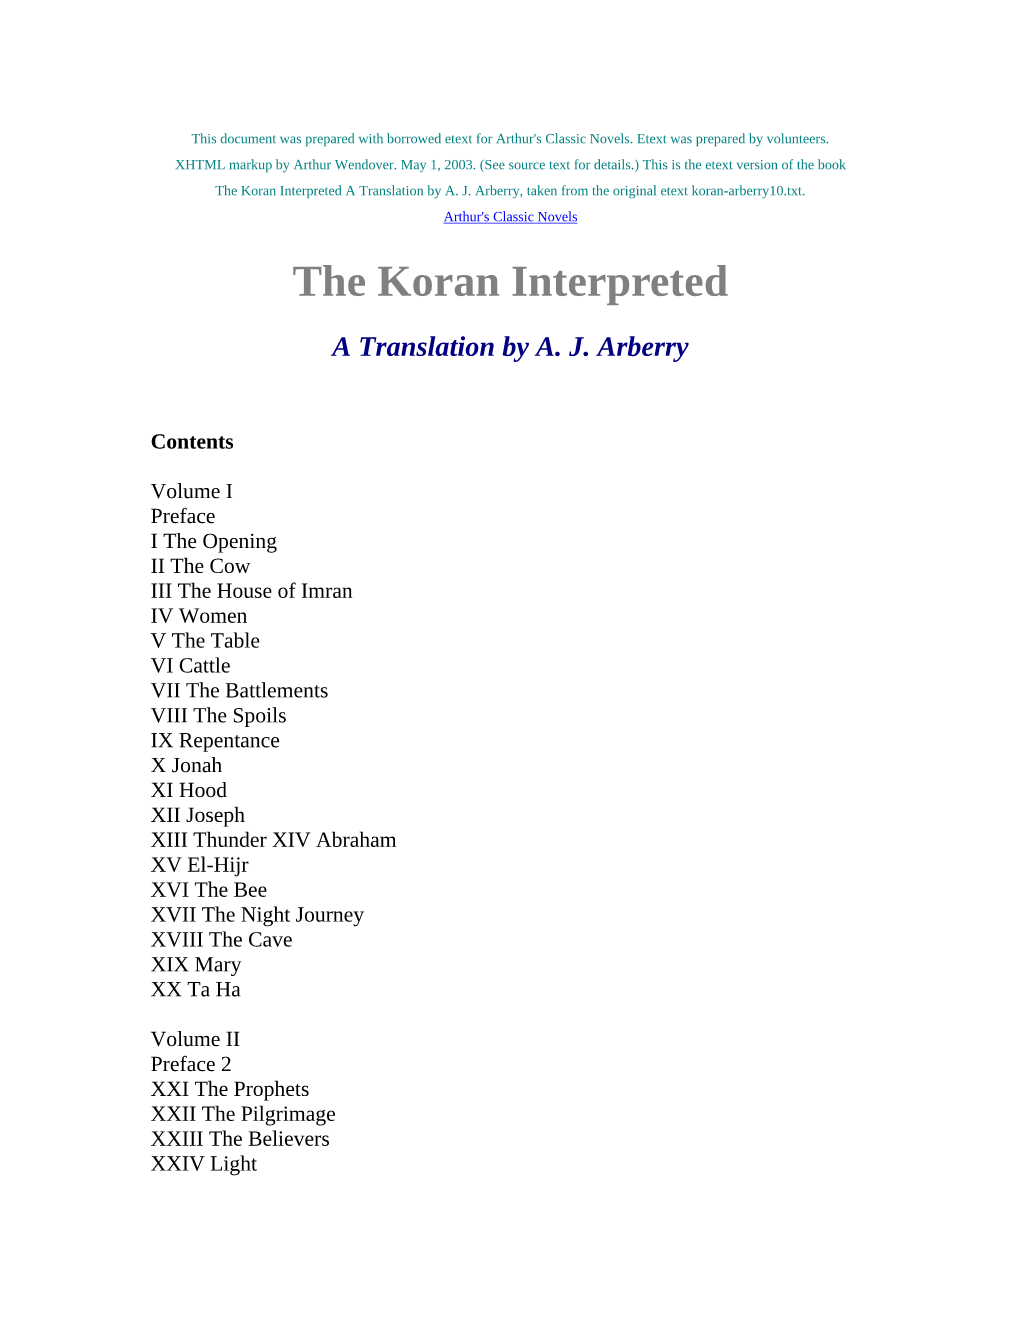 The Koran Interpreted a Translation by AJ Arberry